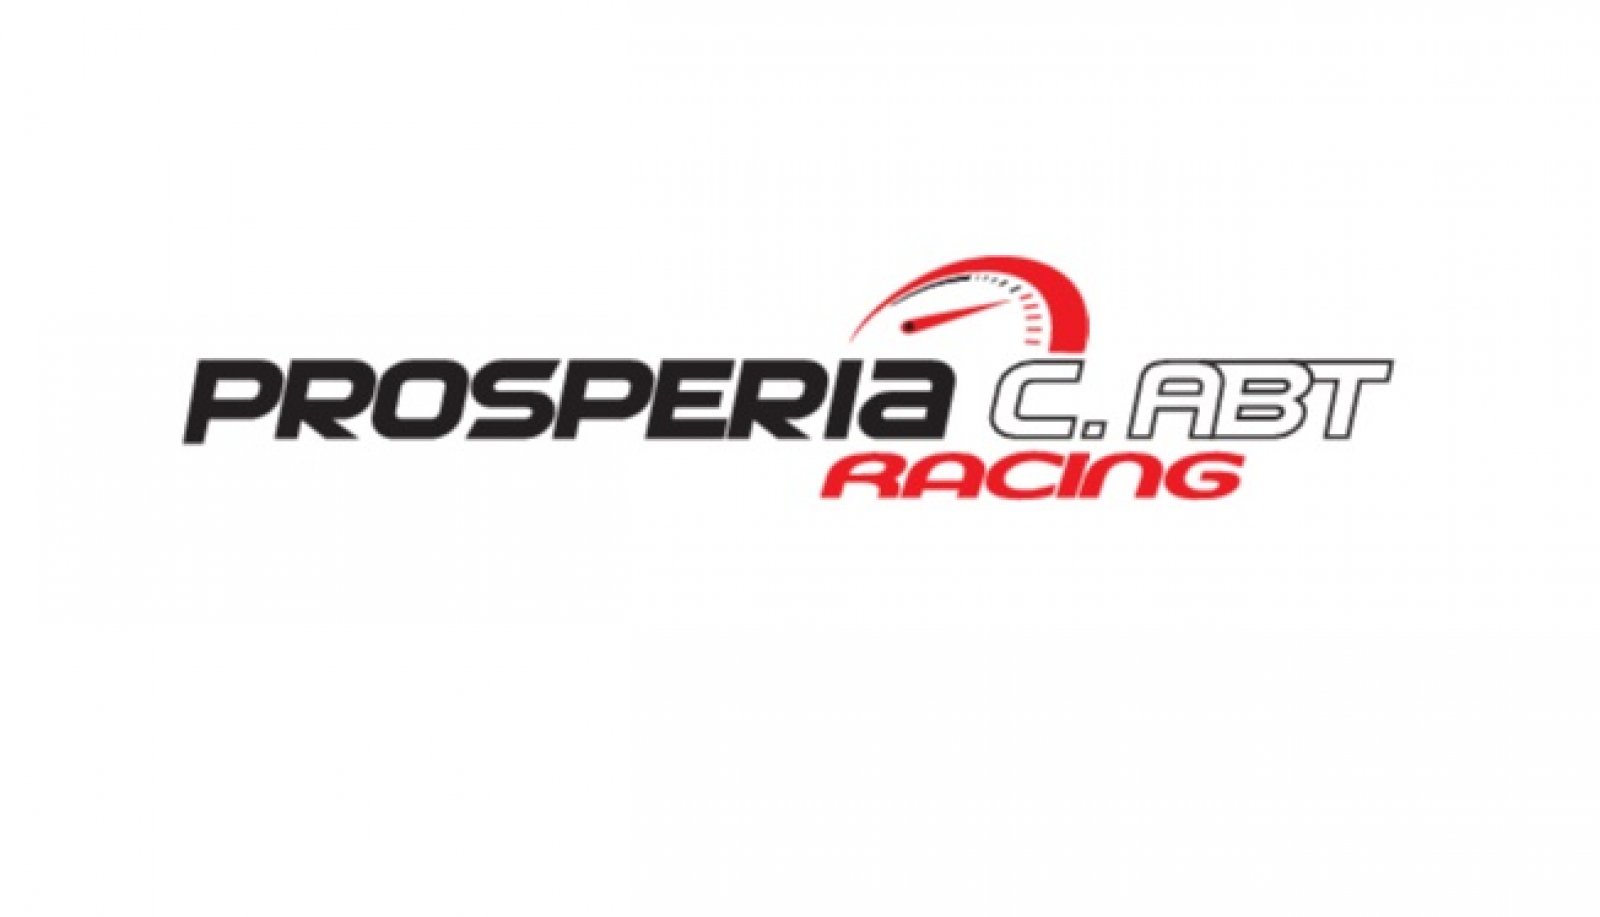 Prosperia C. Abt Racing joins Baku World Challenge